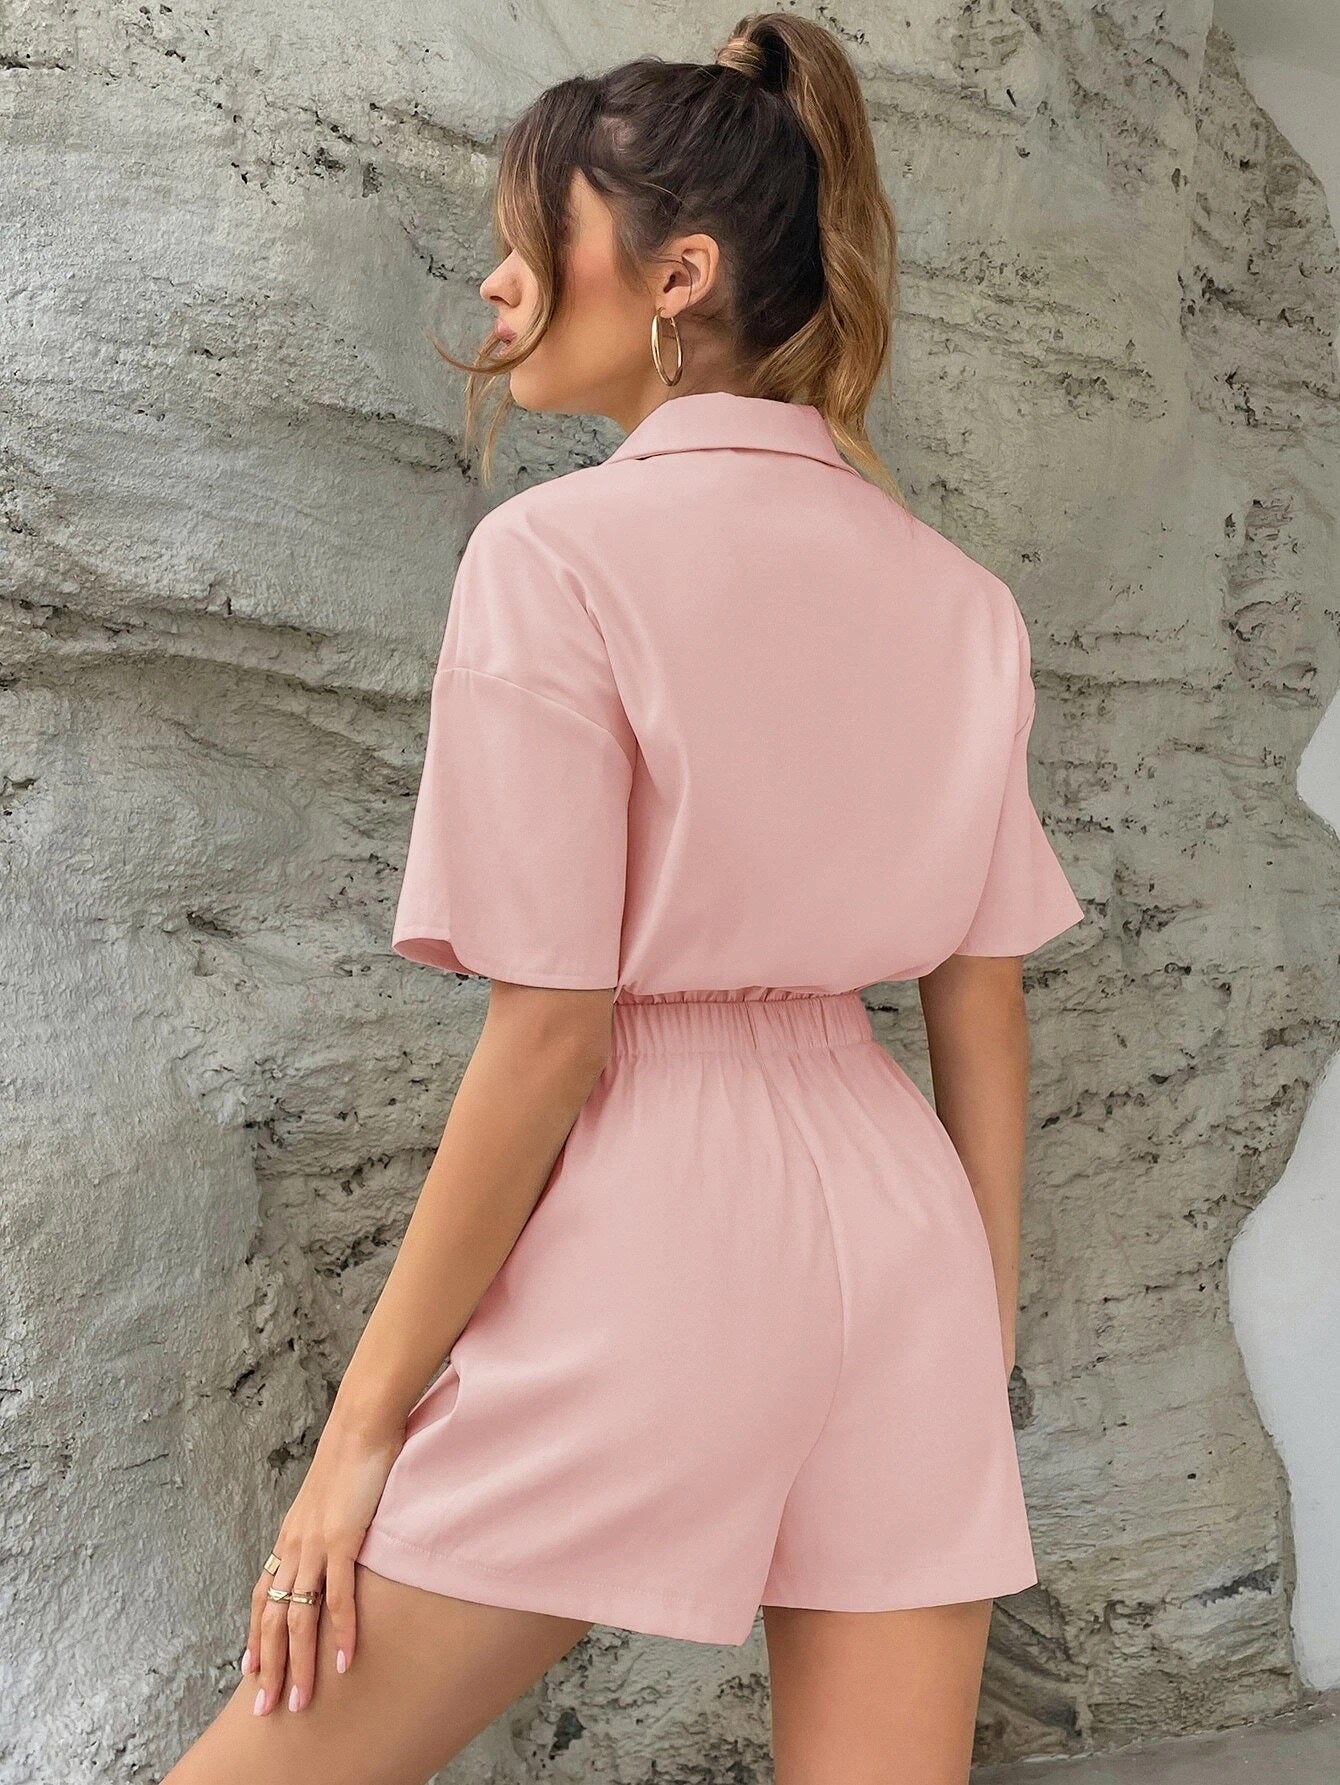 CM-JS527555 Women Casual Seoul Style Flap Pocket Drop Shoulder Shirt Romper - Baby Pink